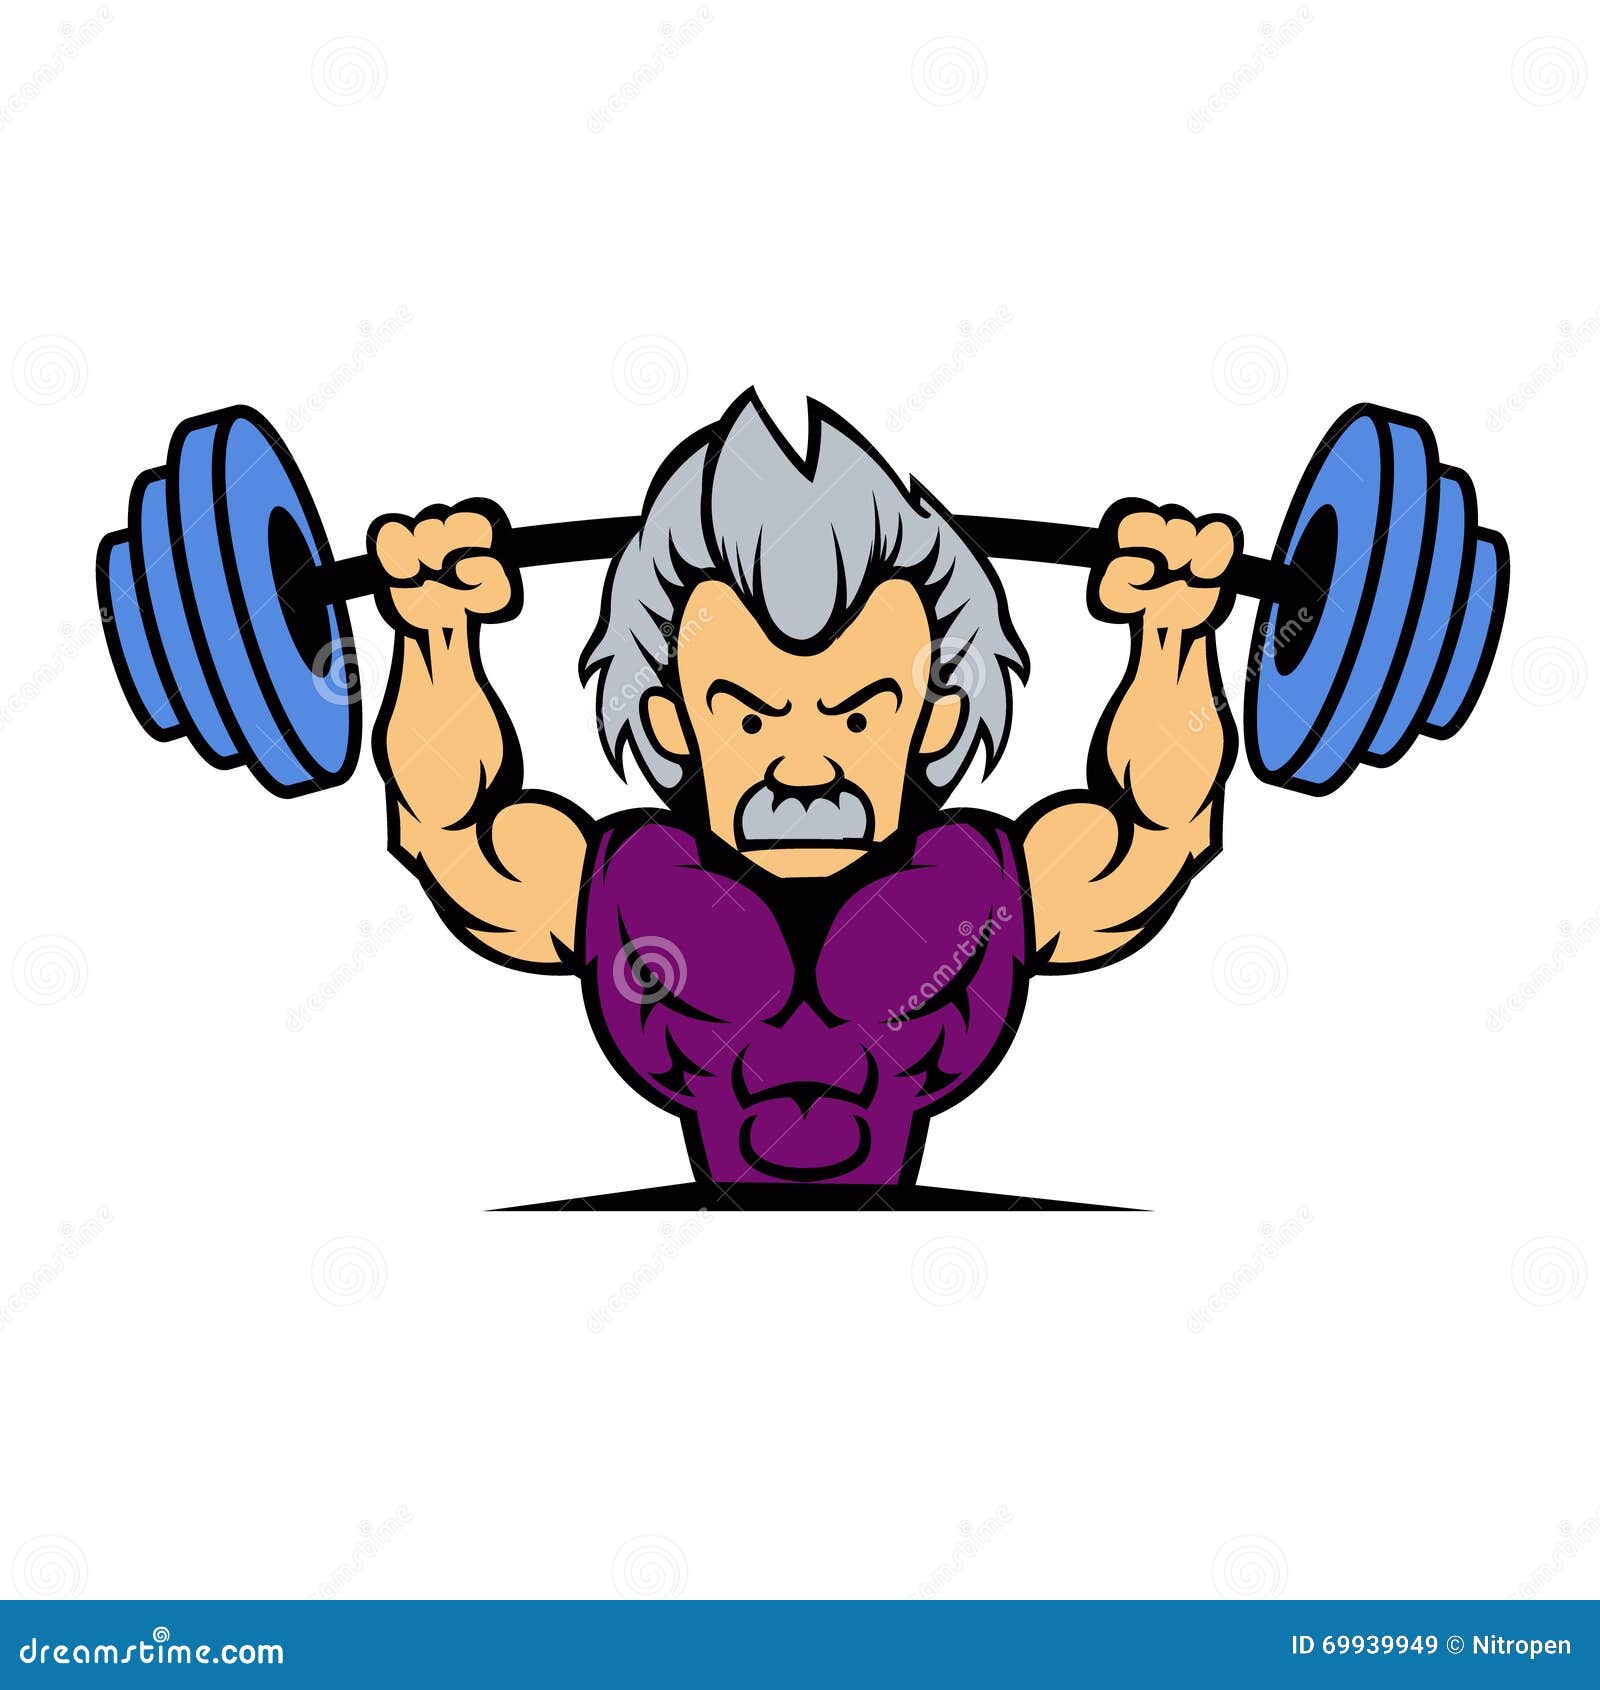 clipart man lifting weights - photo #50